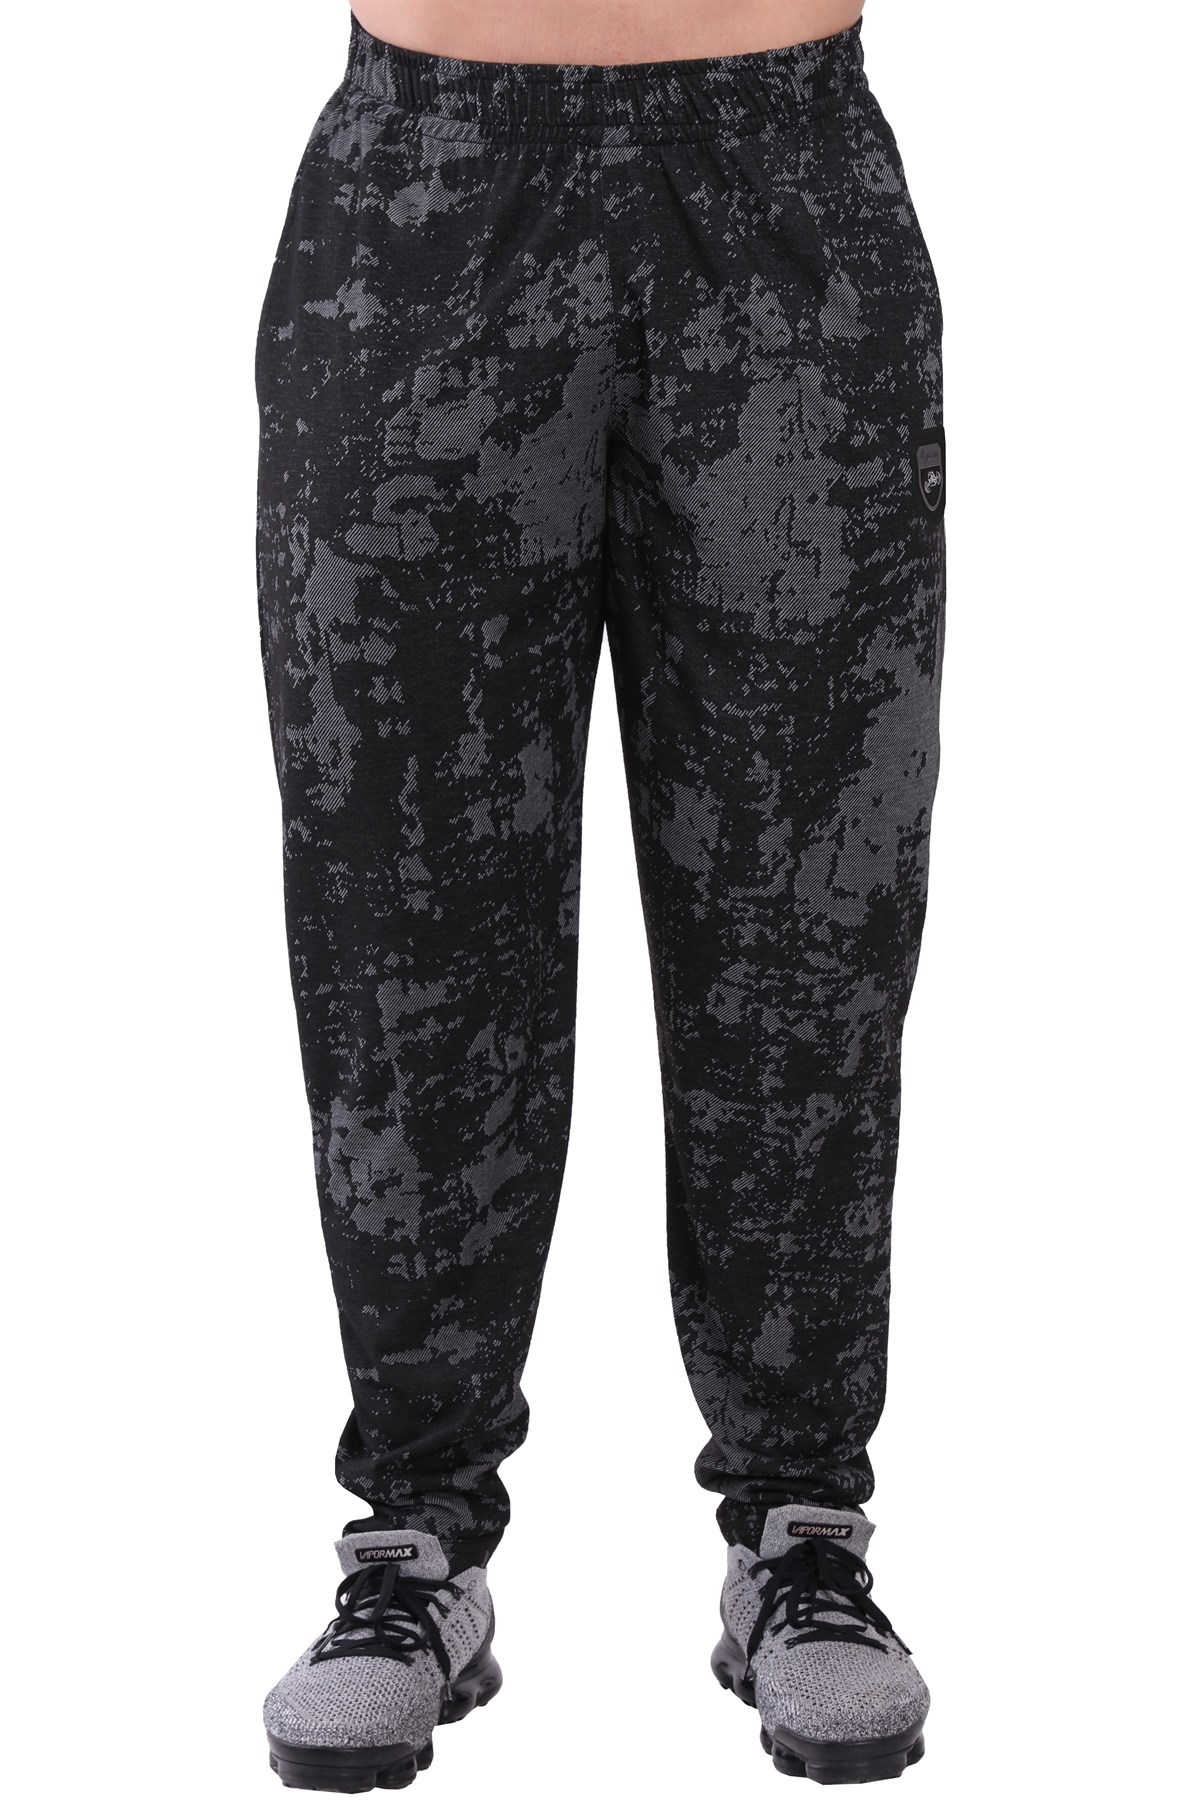 Men's Technical Camouflage Baggy Pants | bigsam.com